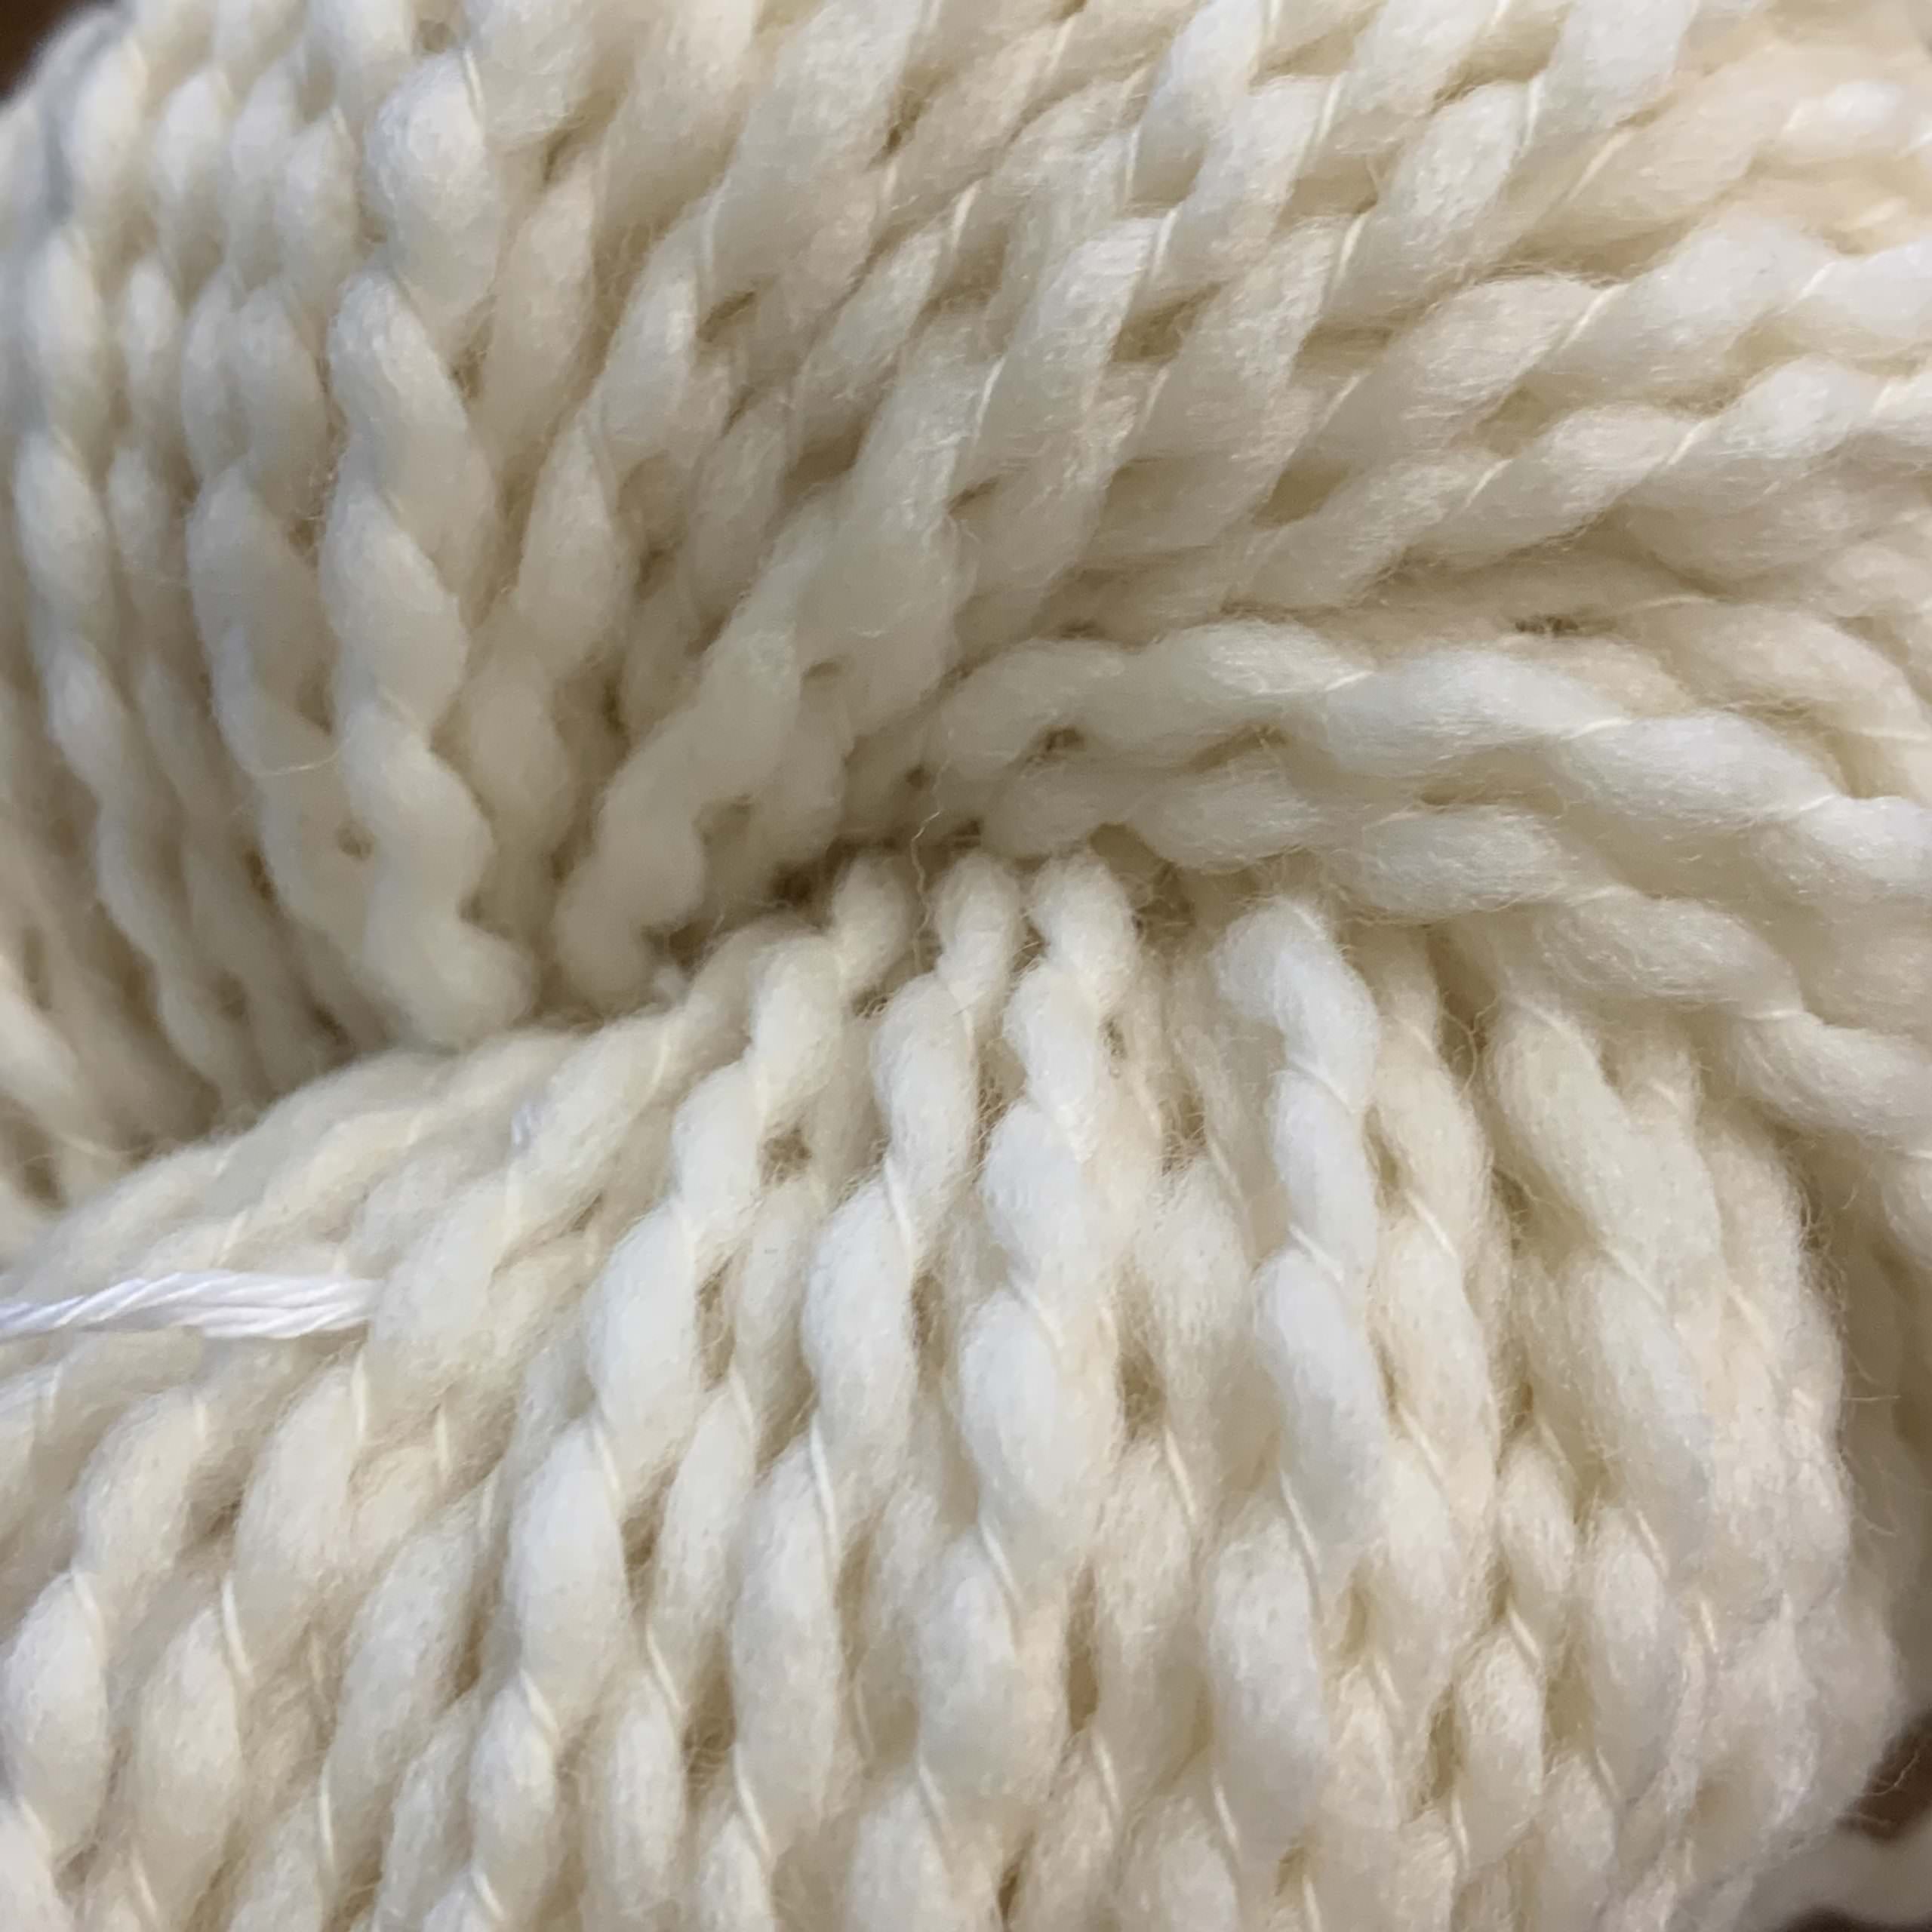 Skeins of Yarn - natural white